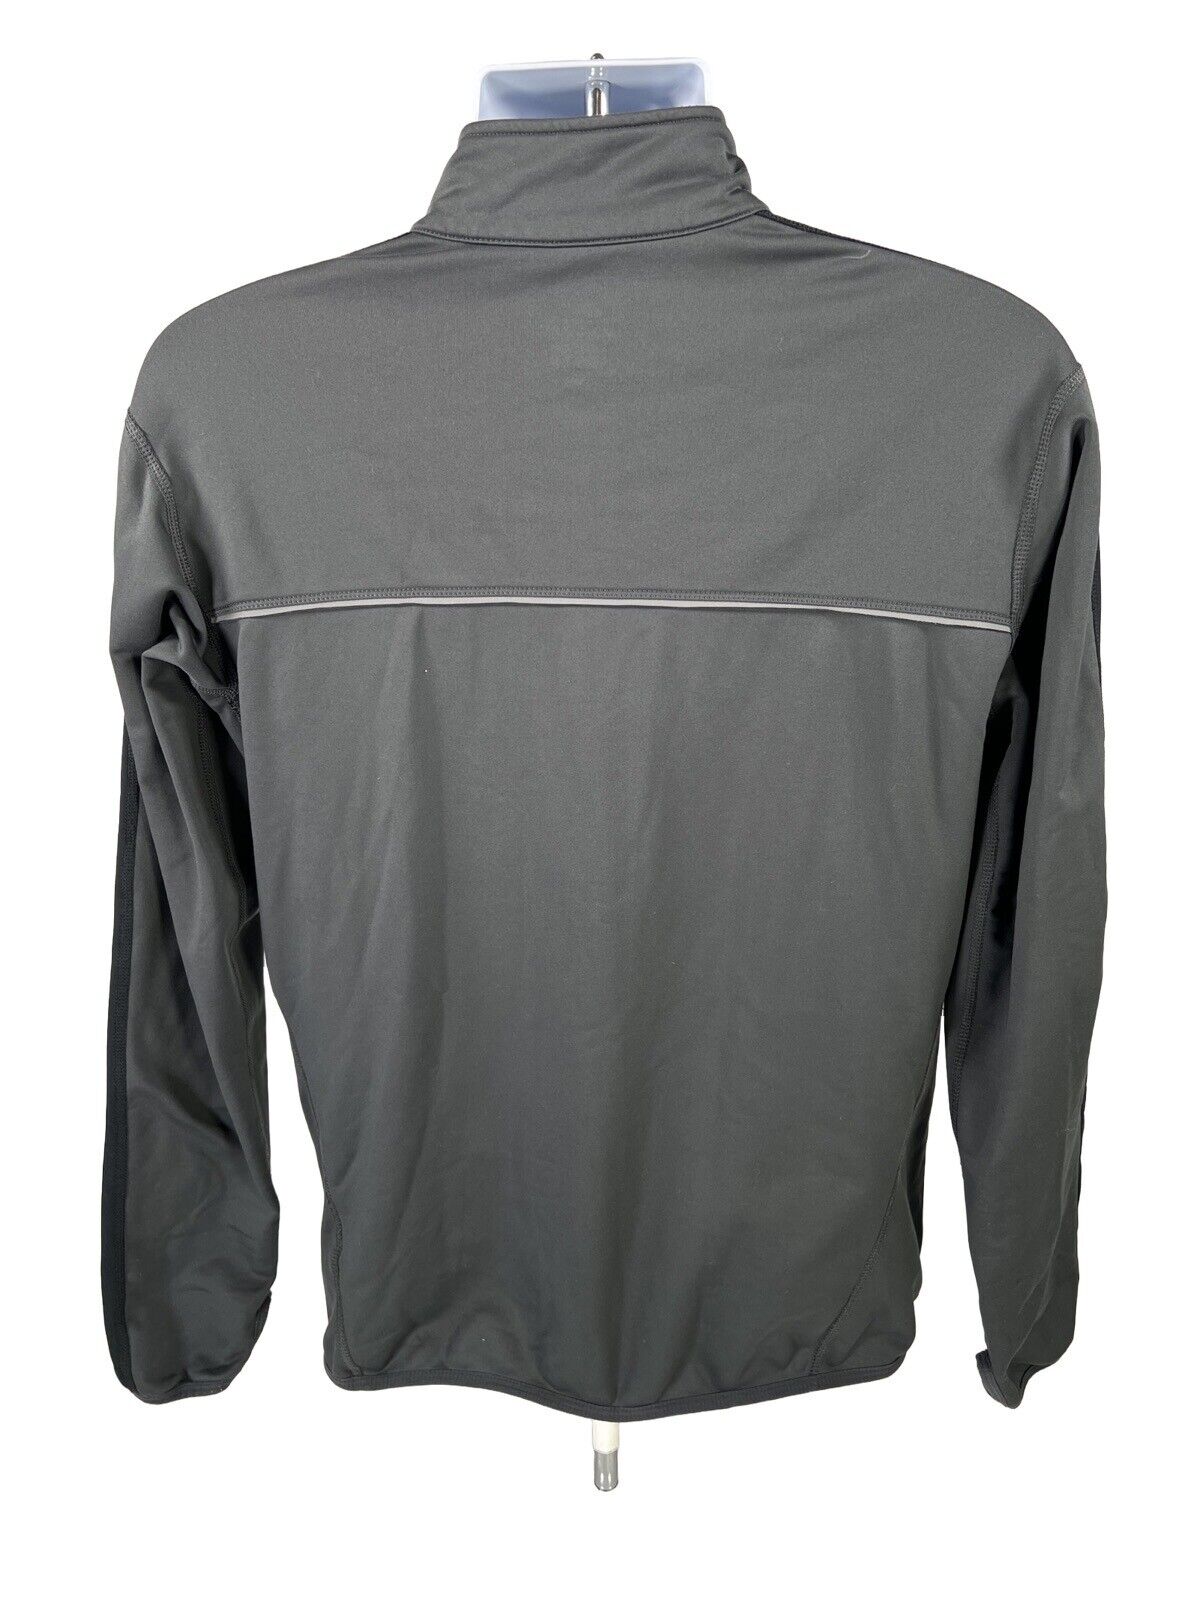 Nike Men's Gray Dri-Fit Full Zip Running Athletic Jacket - M